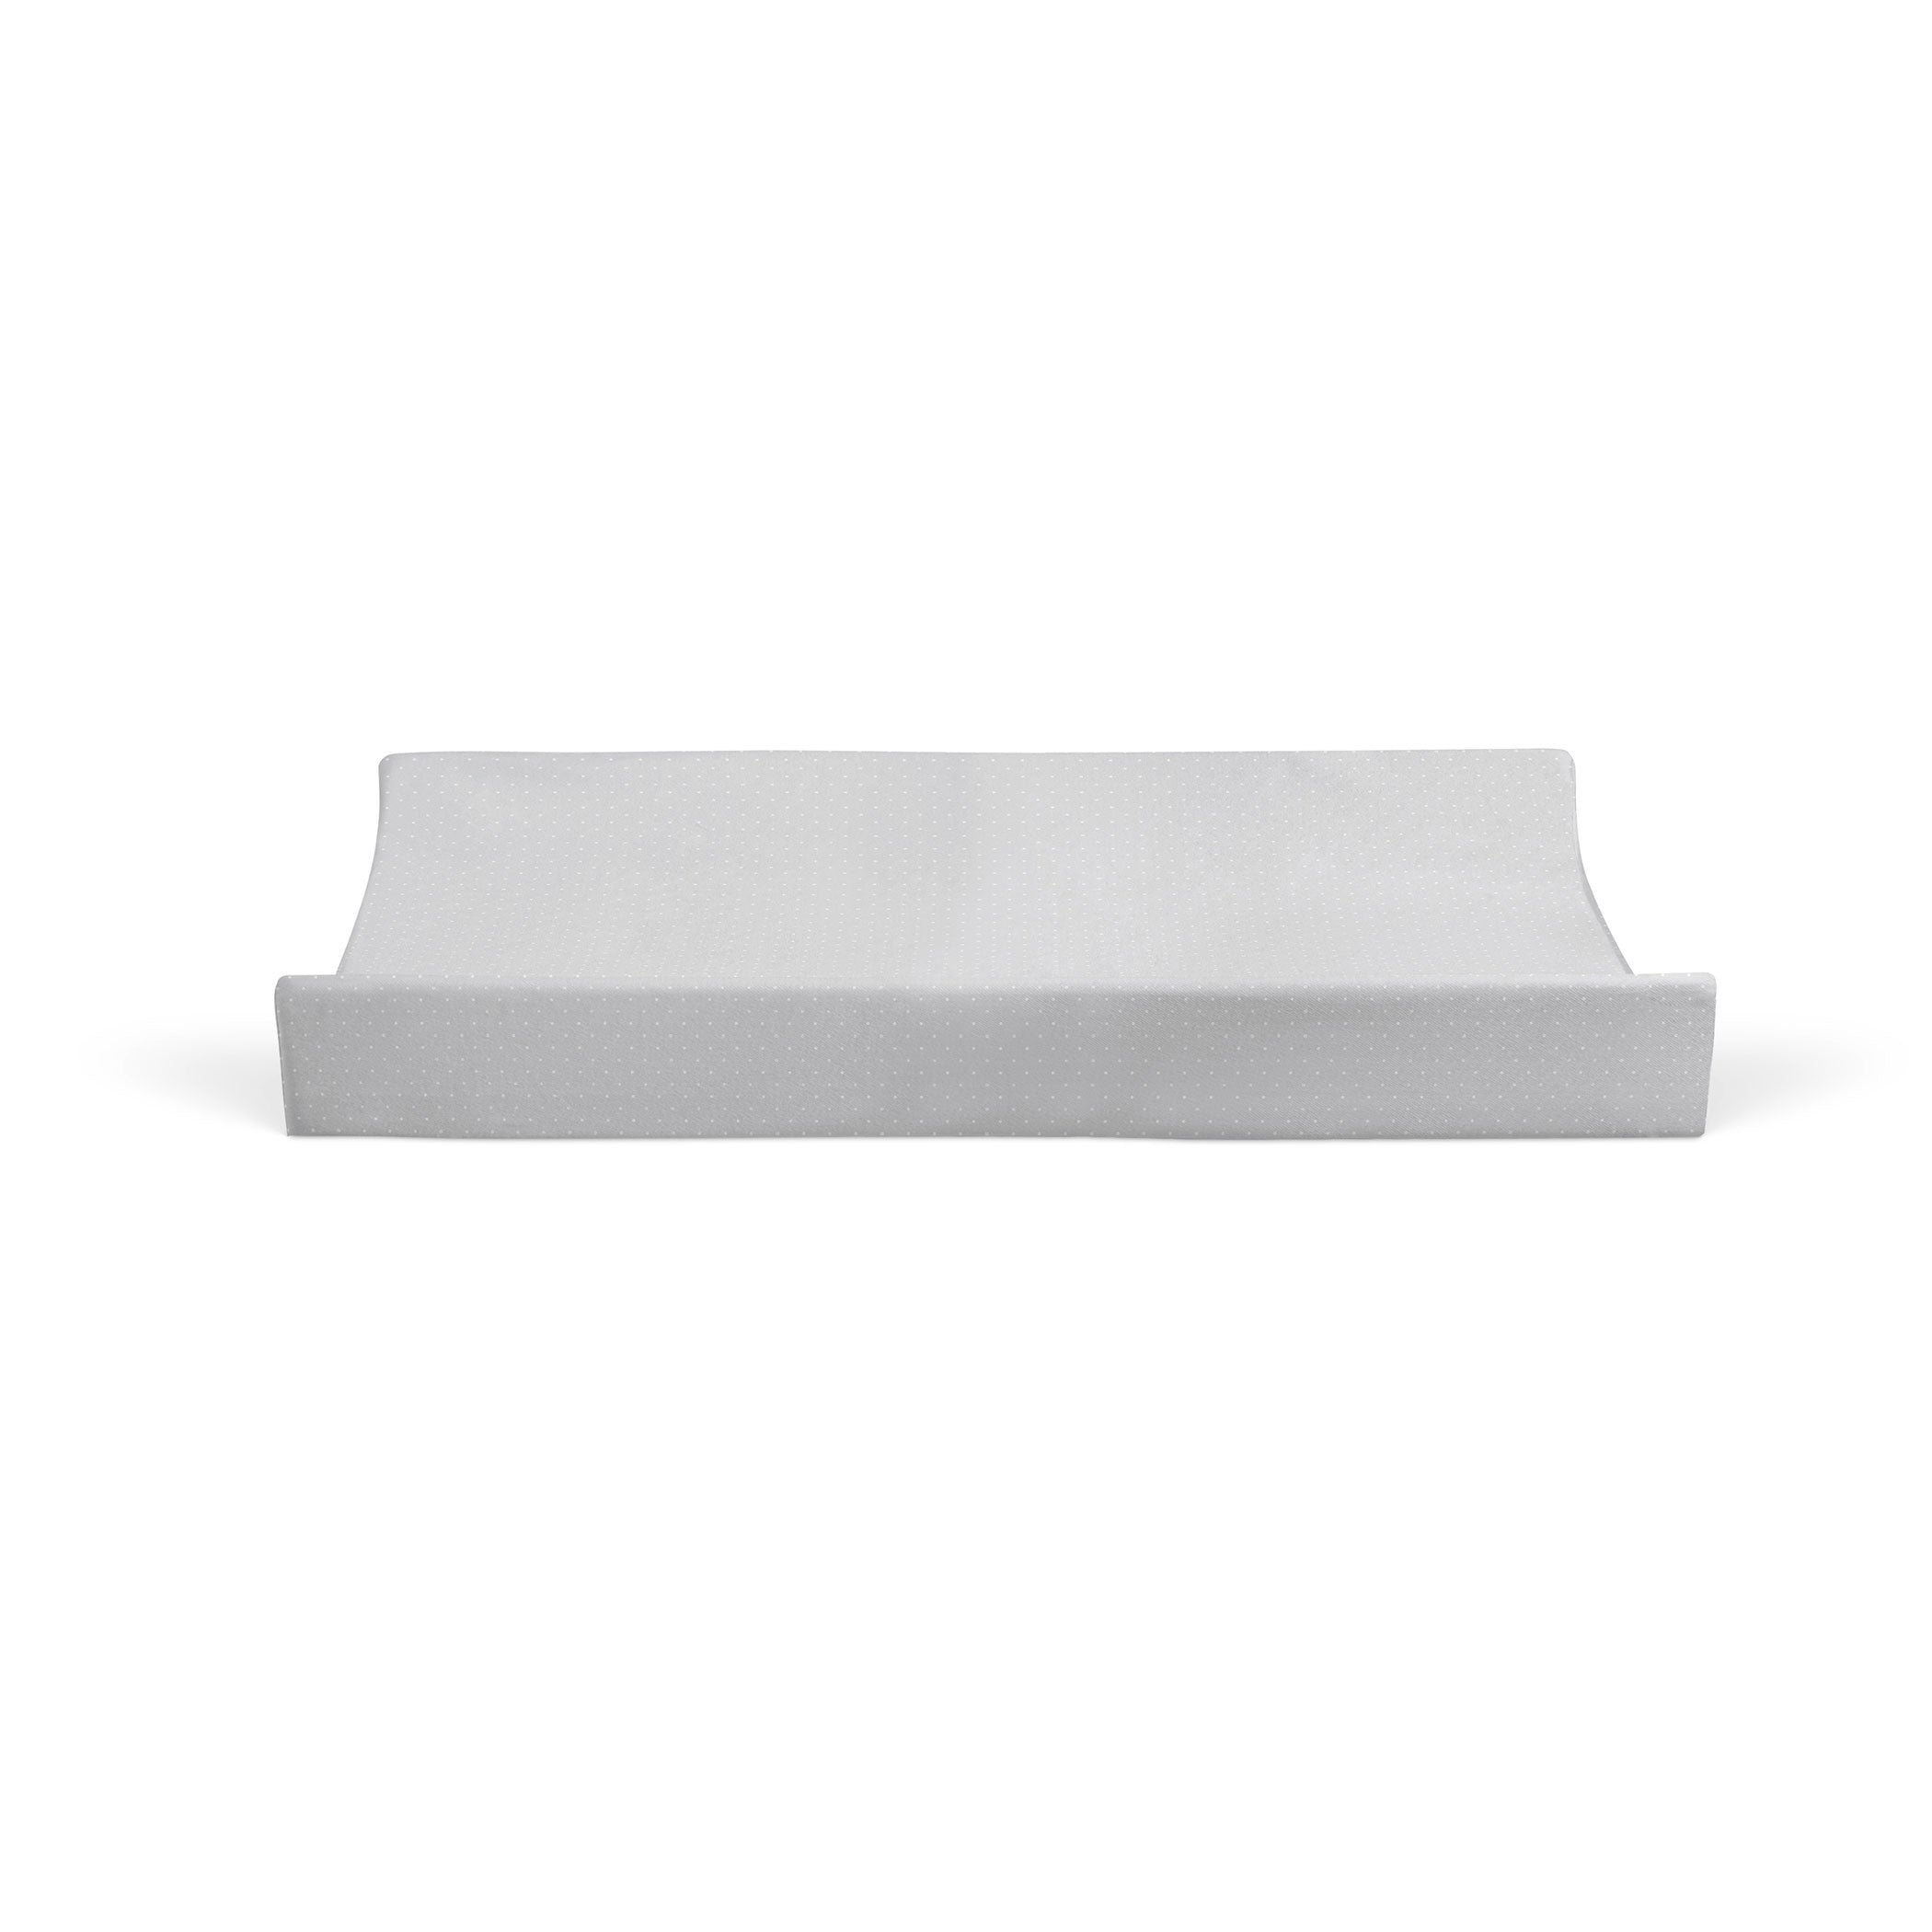 Confetti 2pk Waterproof Change Pad Covers Grey/Taupe